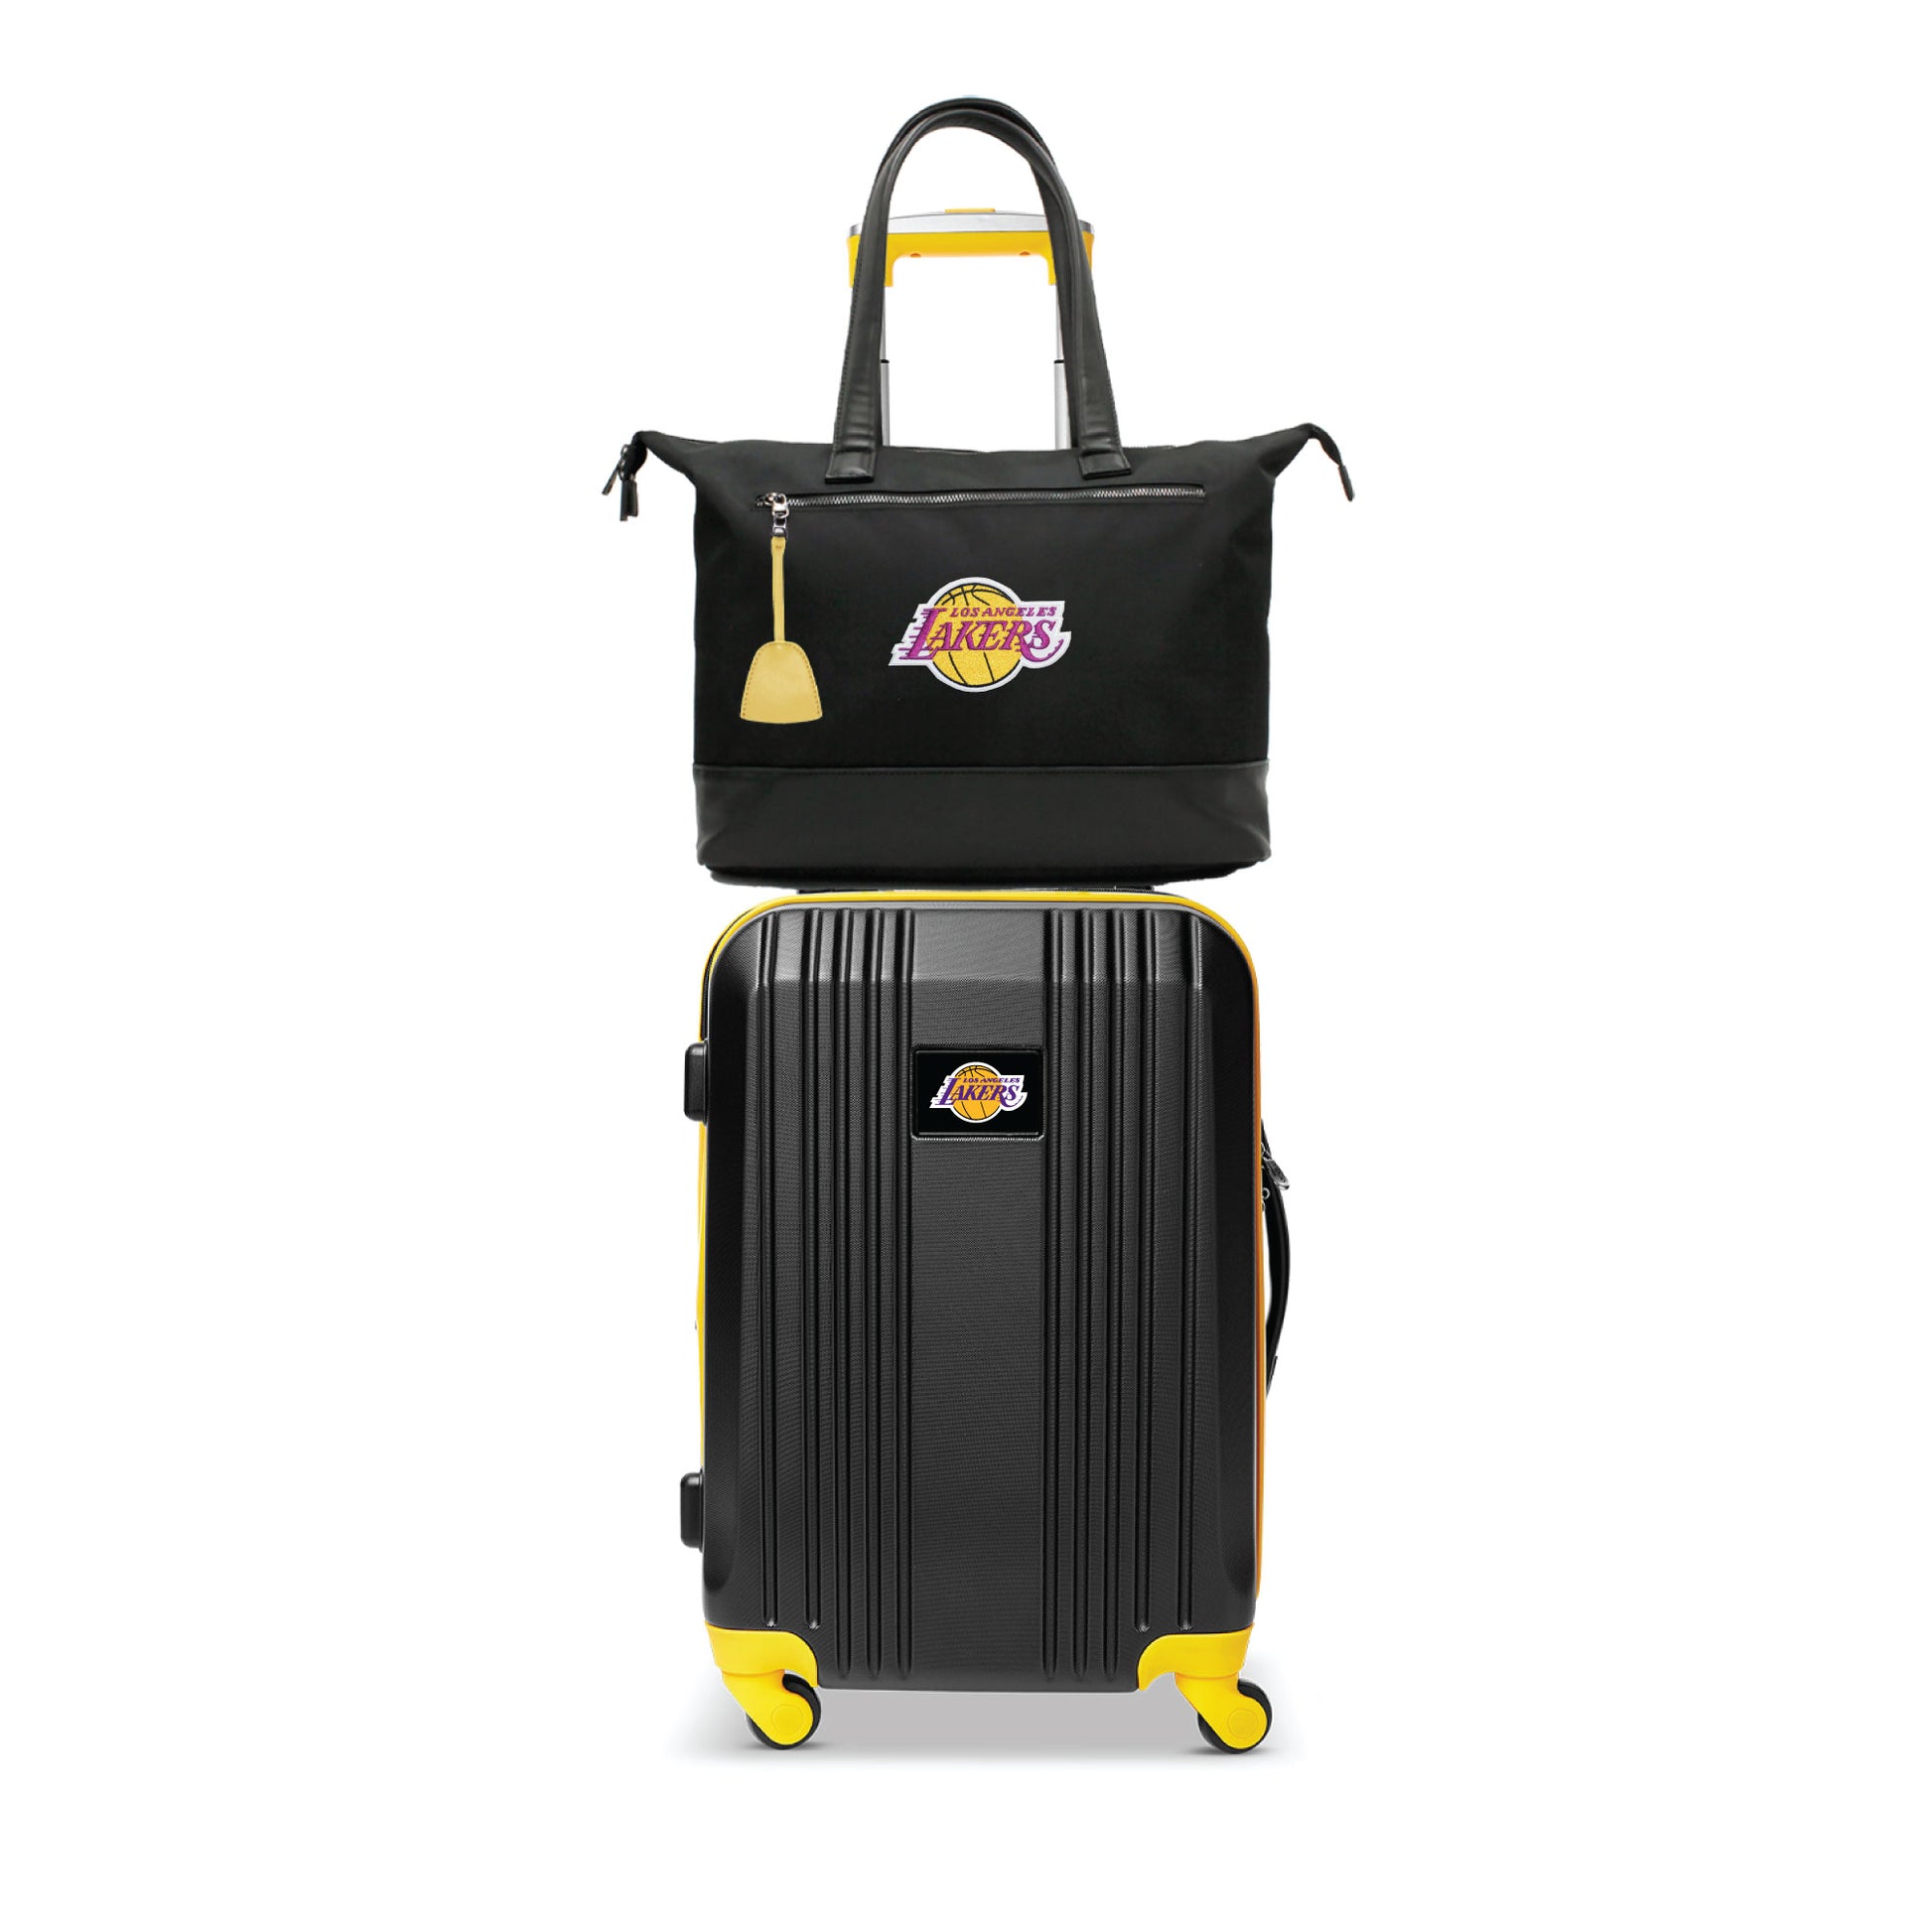 Los Angeles Lakers Premium Laptop Tote Bag and Luggage Set